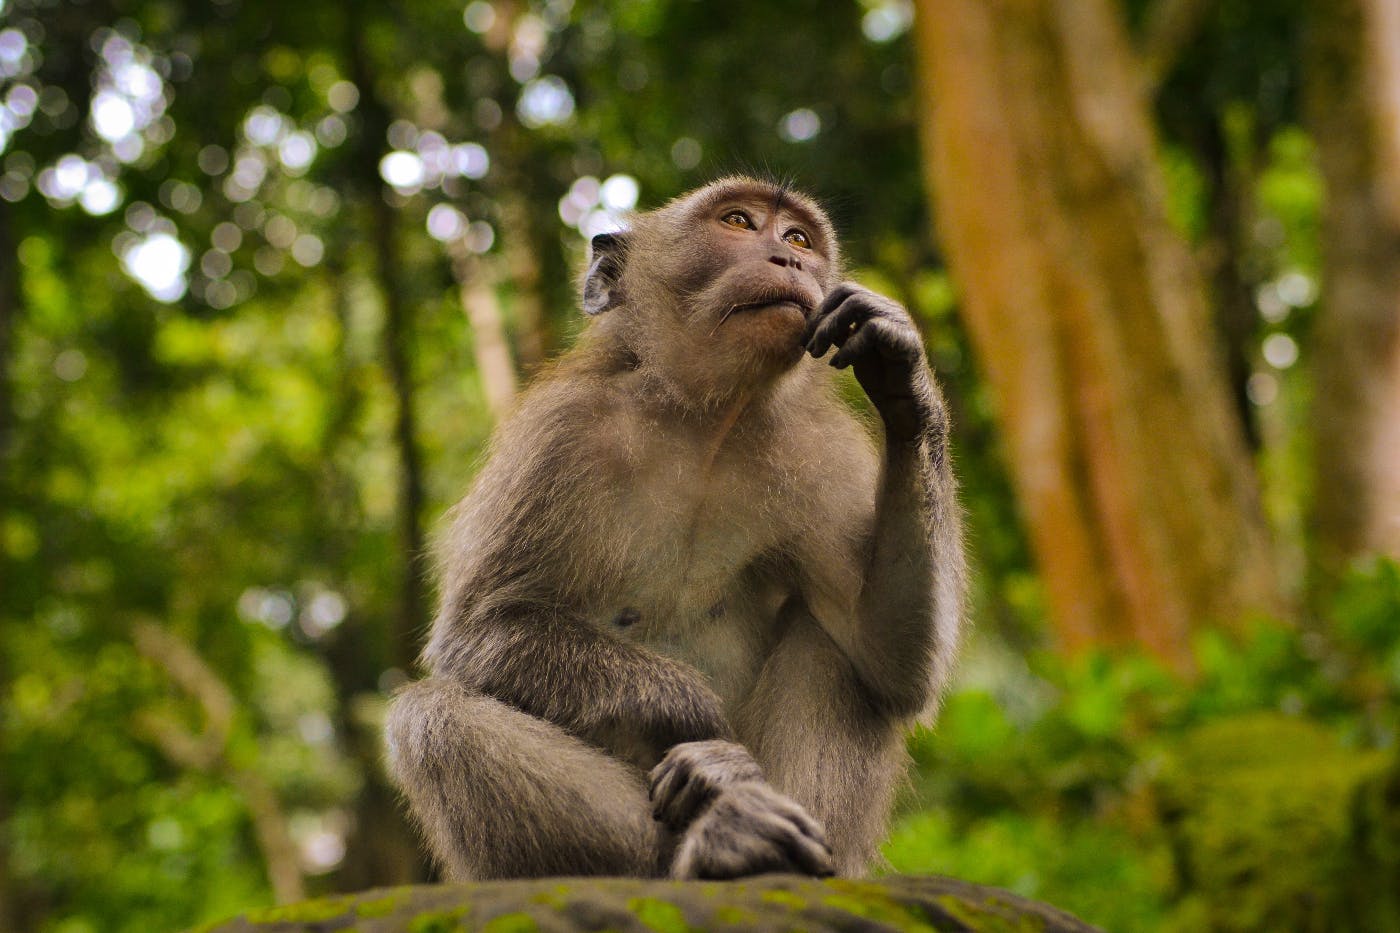 A monkey sitting and thinking